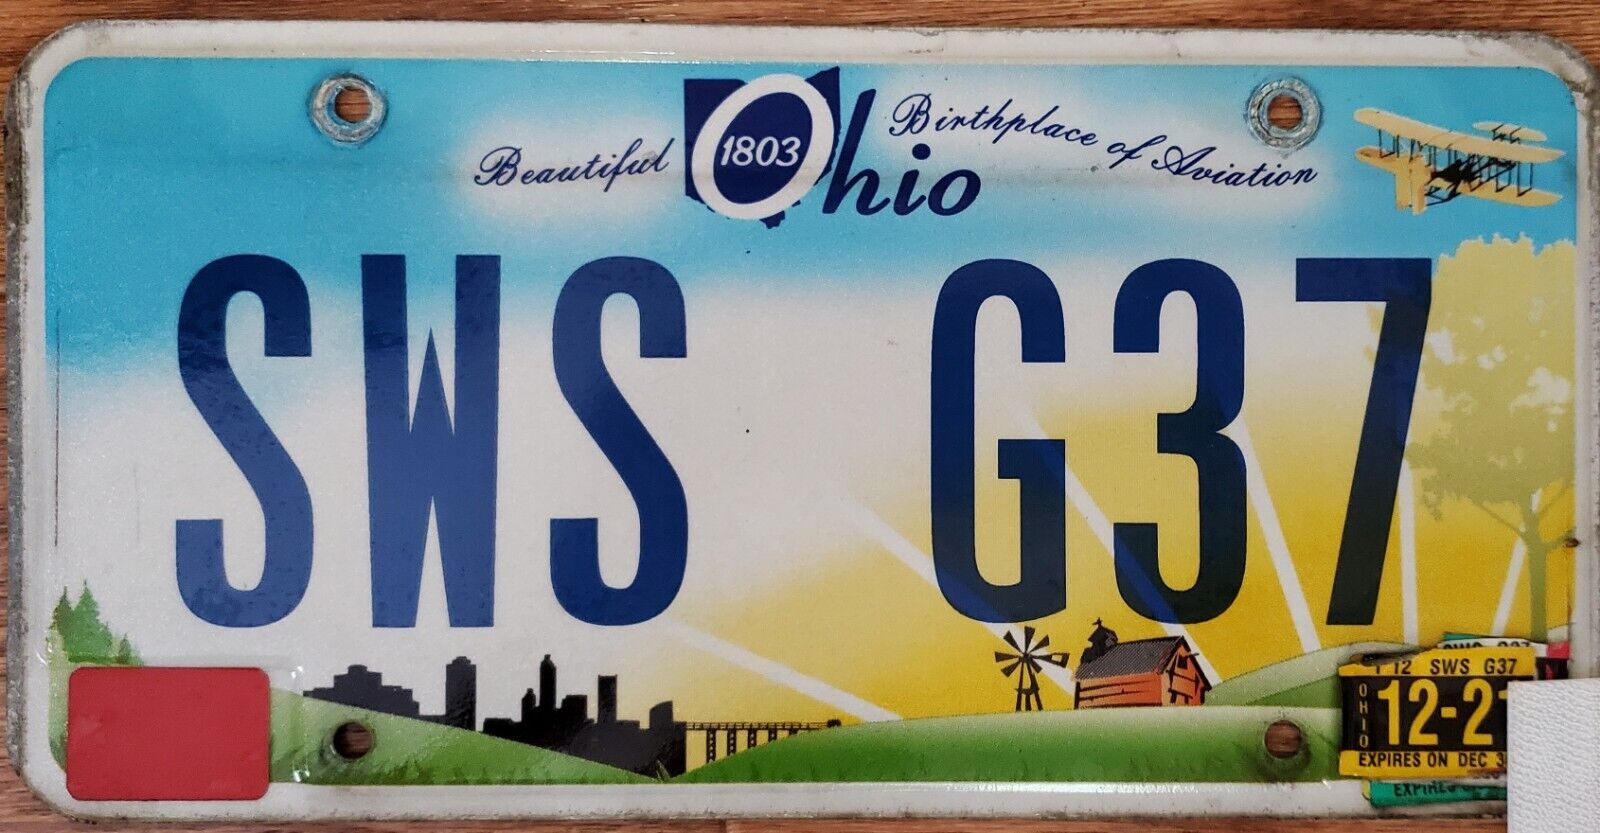 Ohio License Plate 2013 Beautiful Ohio Colorful SWS G37 Infiniti Cincinnati